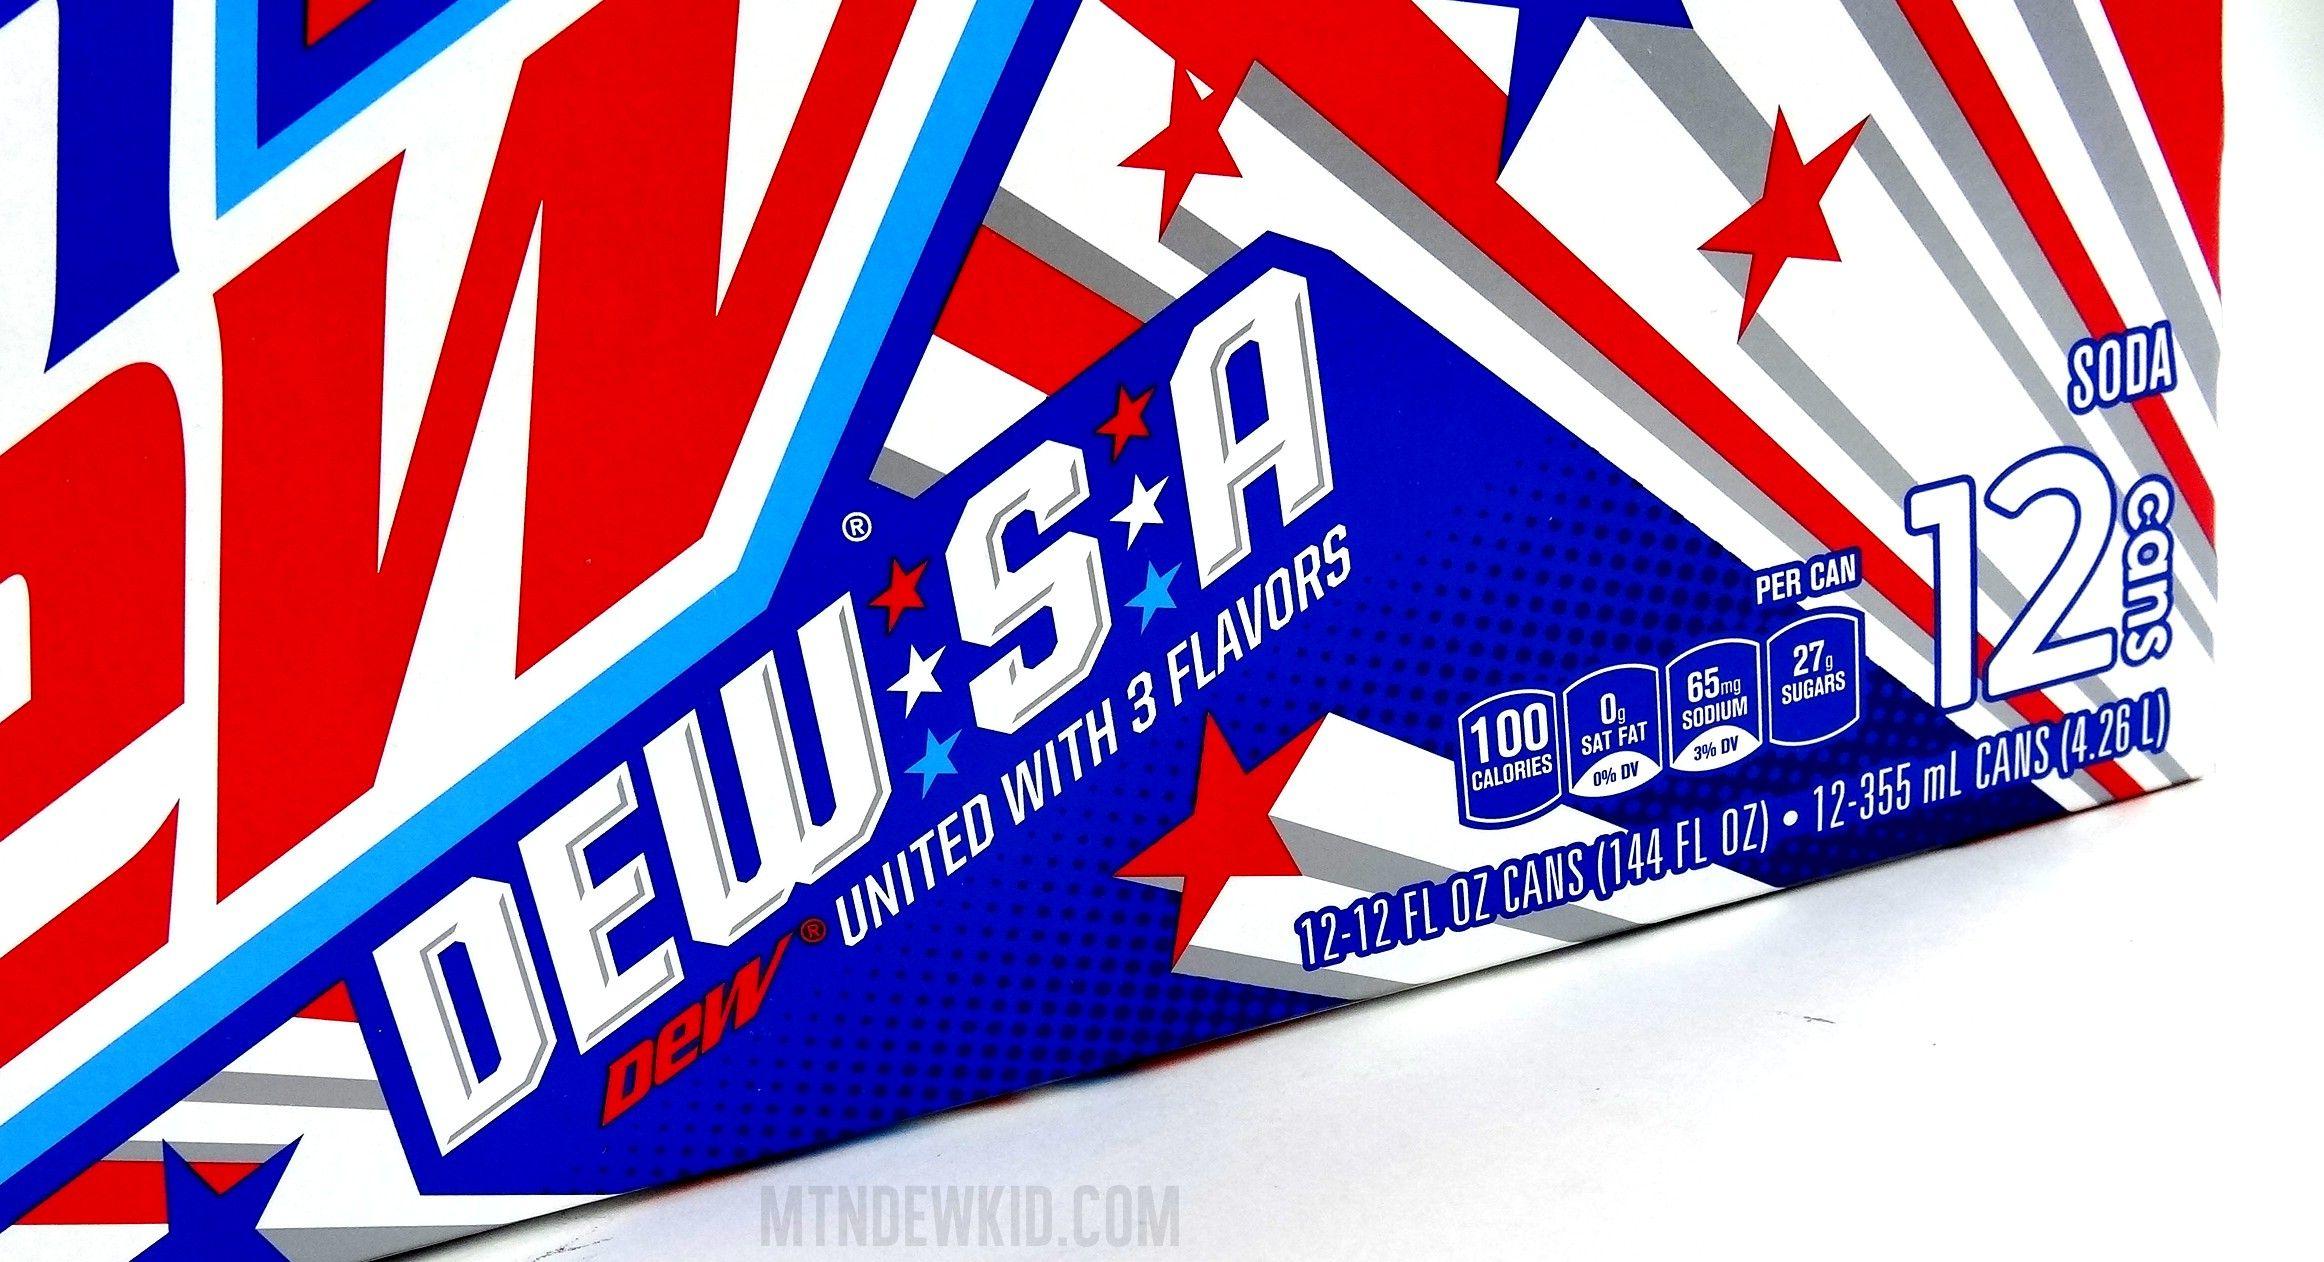 Dew SA Logo - A Look at Mtn Dew's DewSA Graphics. Mtn Dew Kid